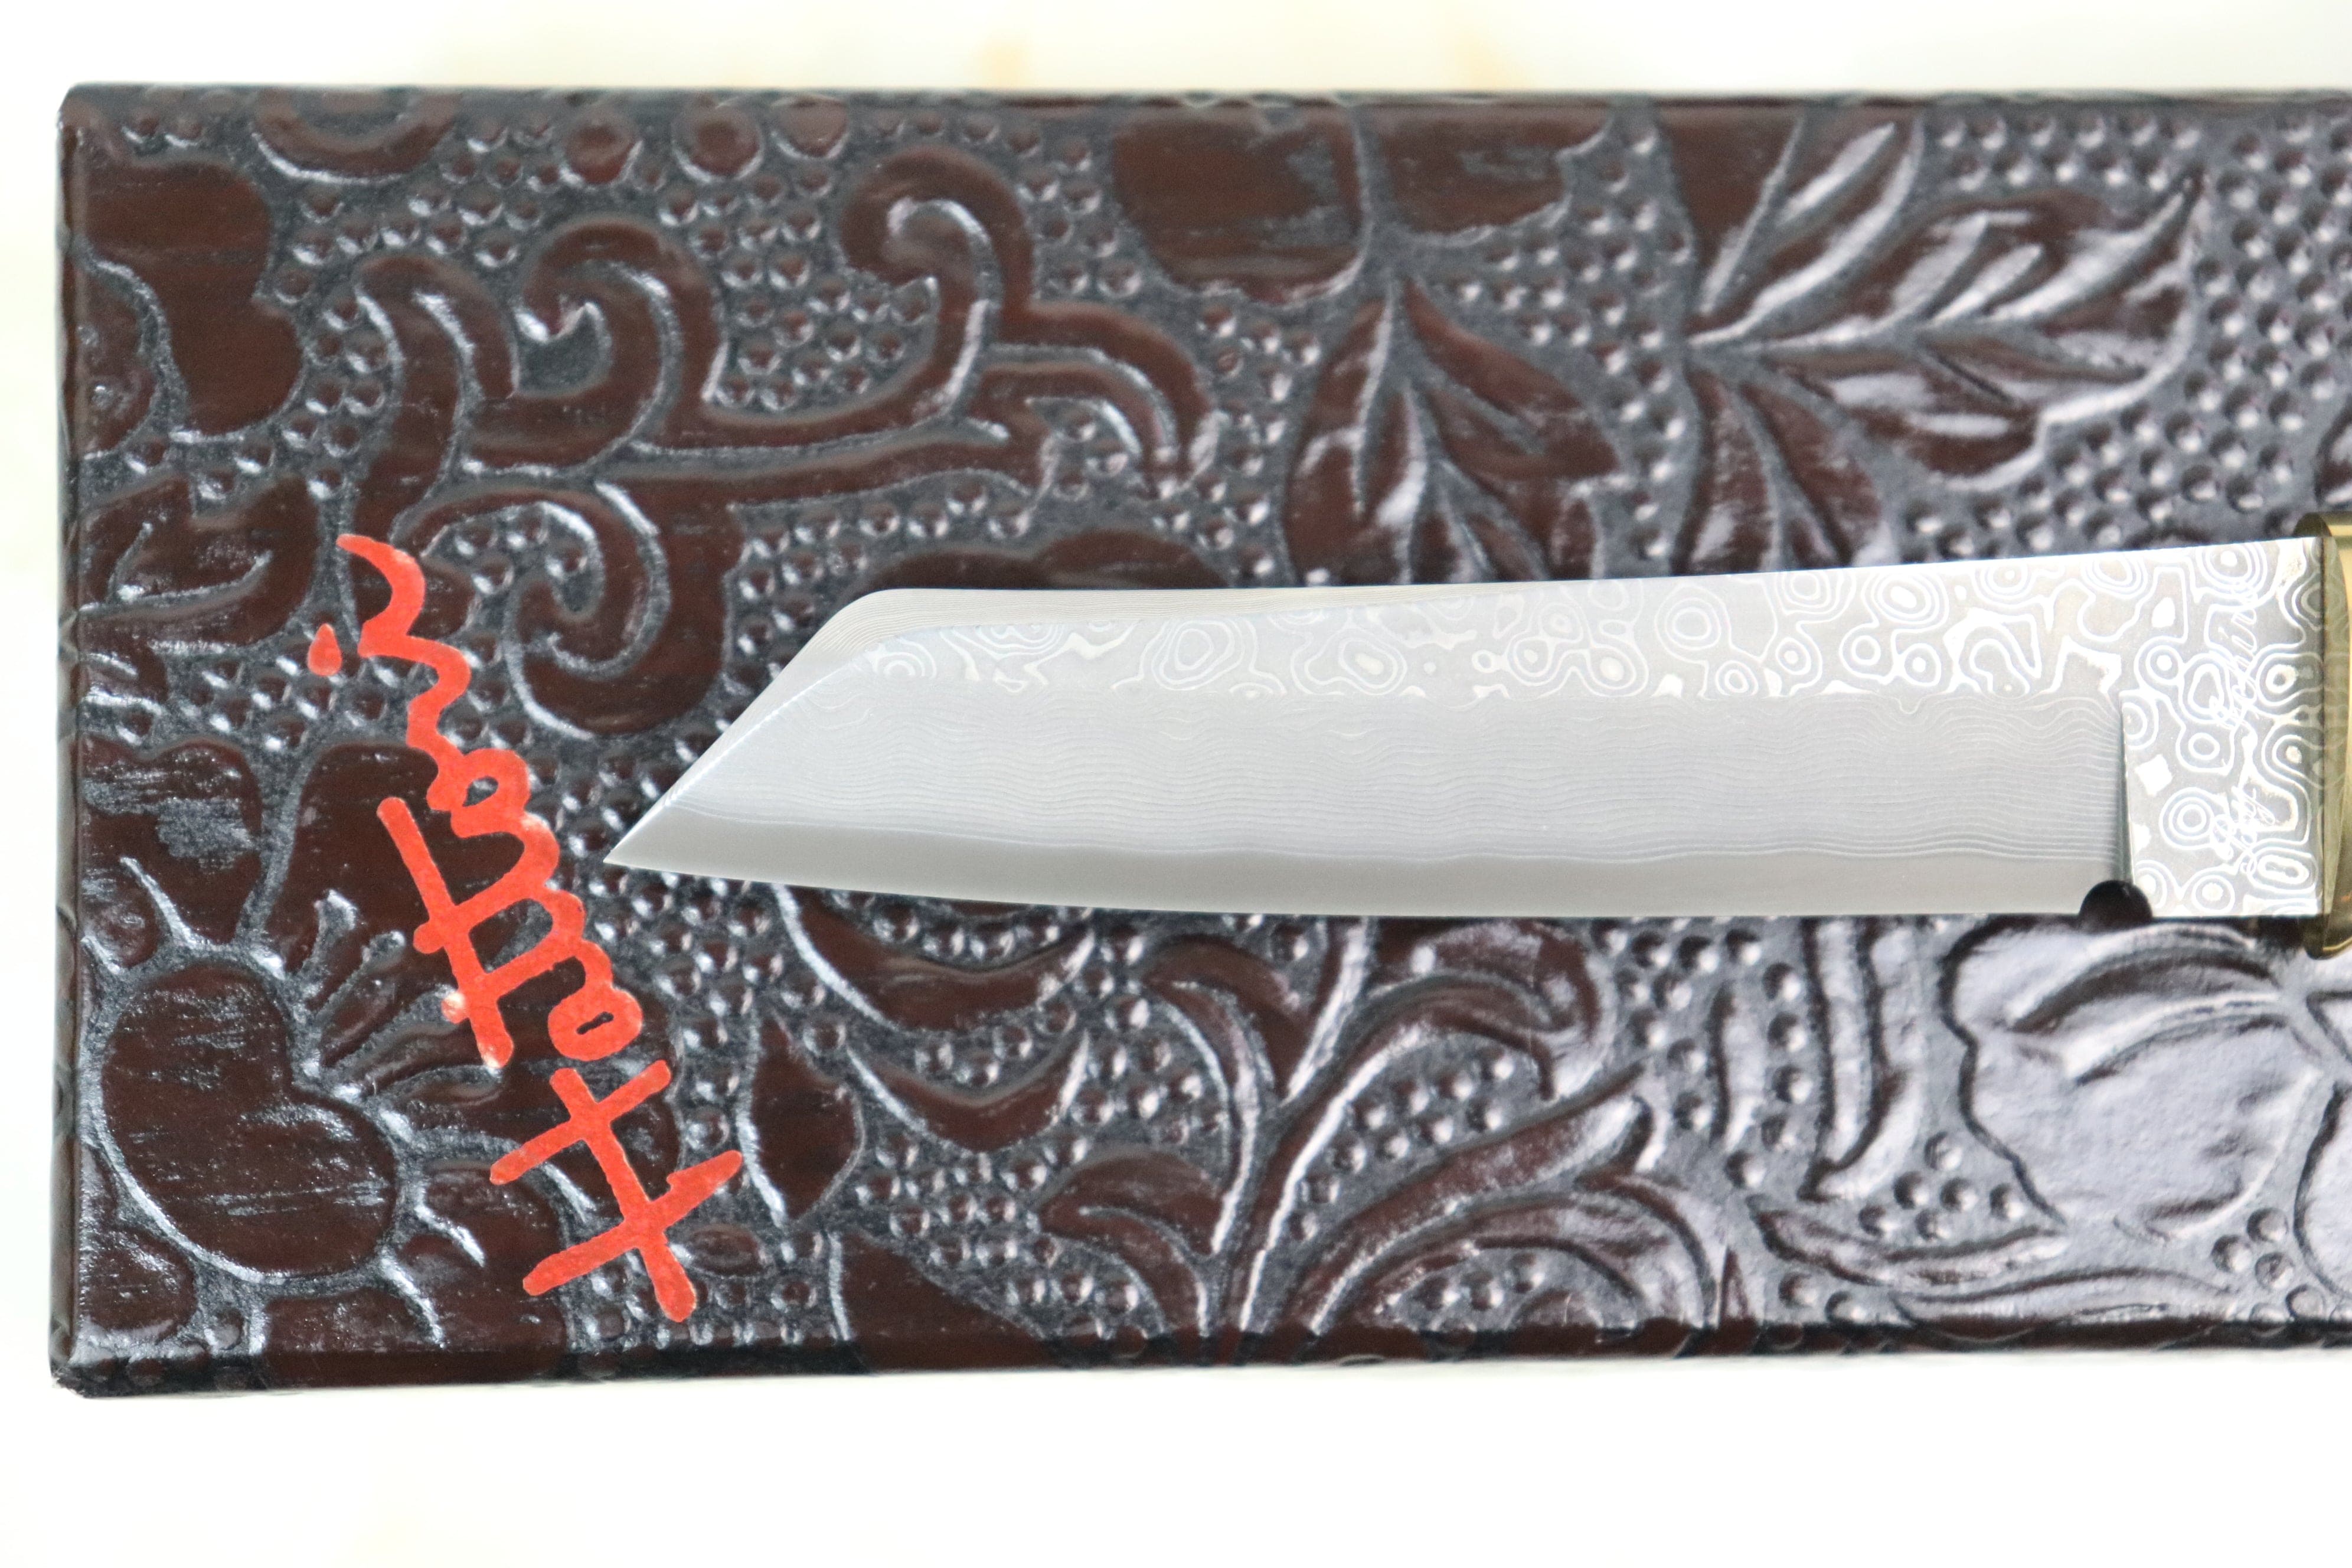 Daitan Knife Set - Hatori Kitchen